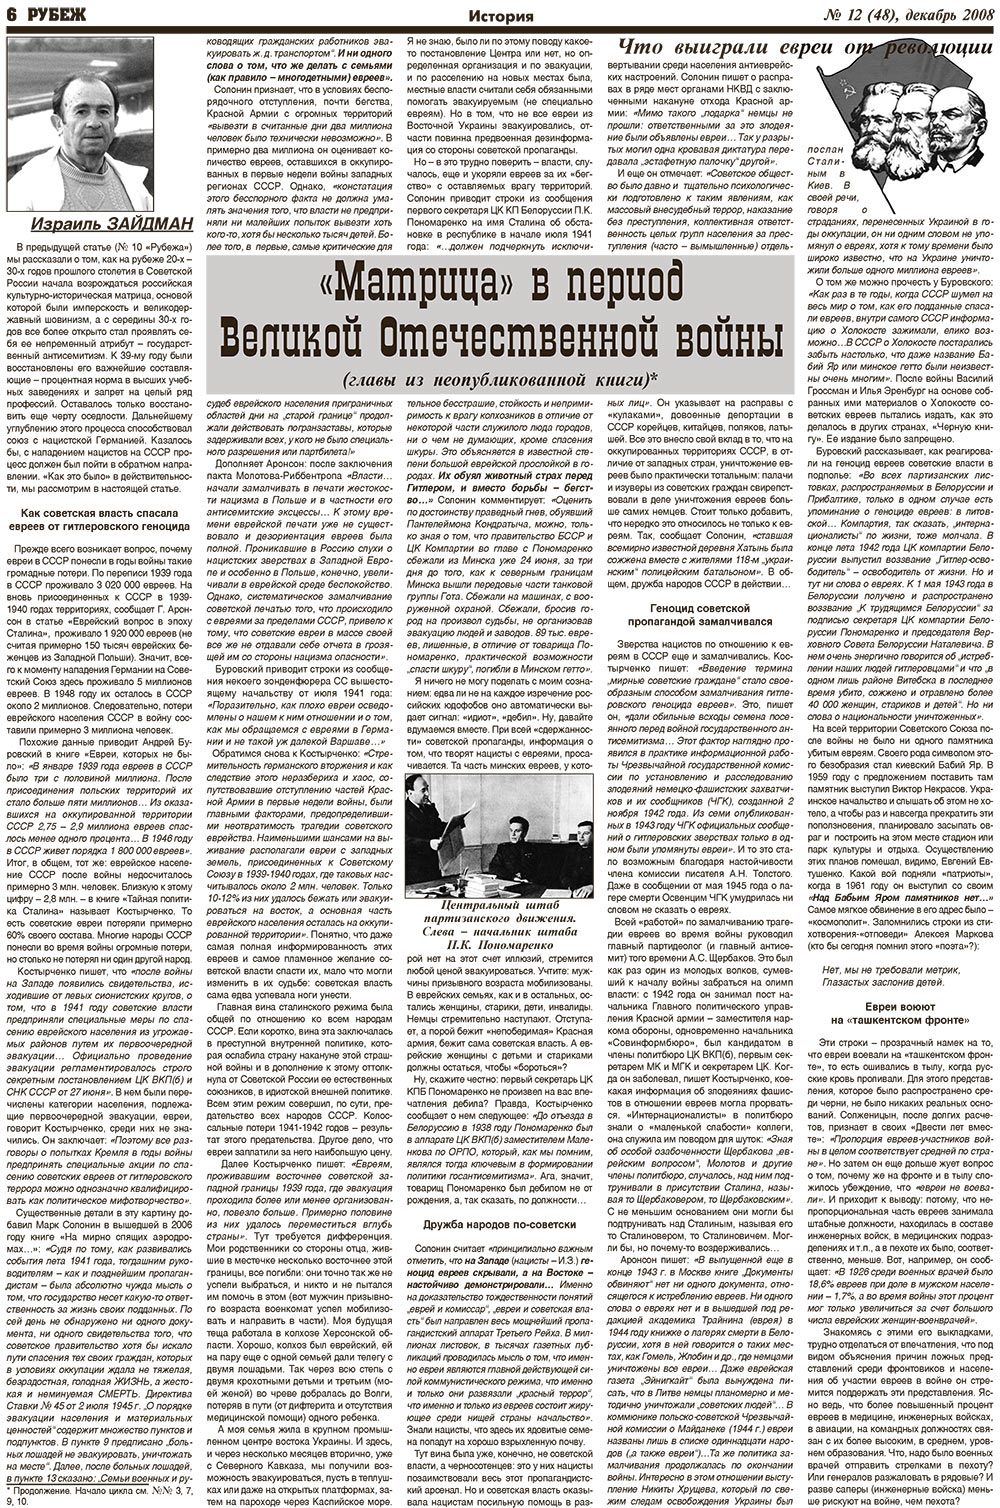 Рубеж, газета. 2008 №12 стр.6